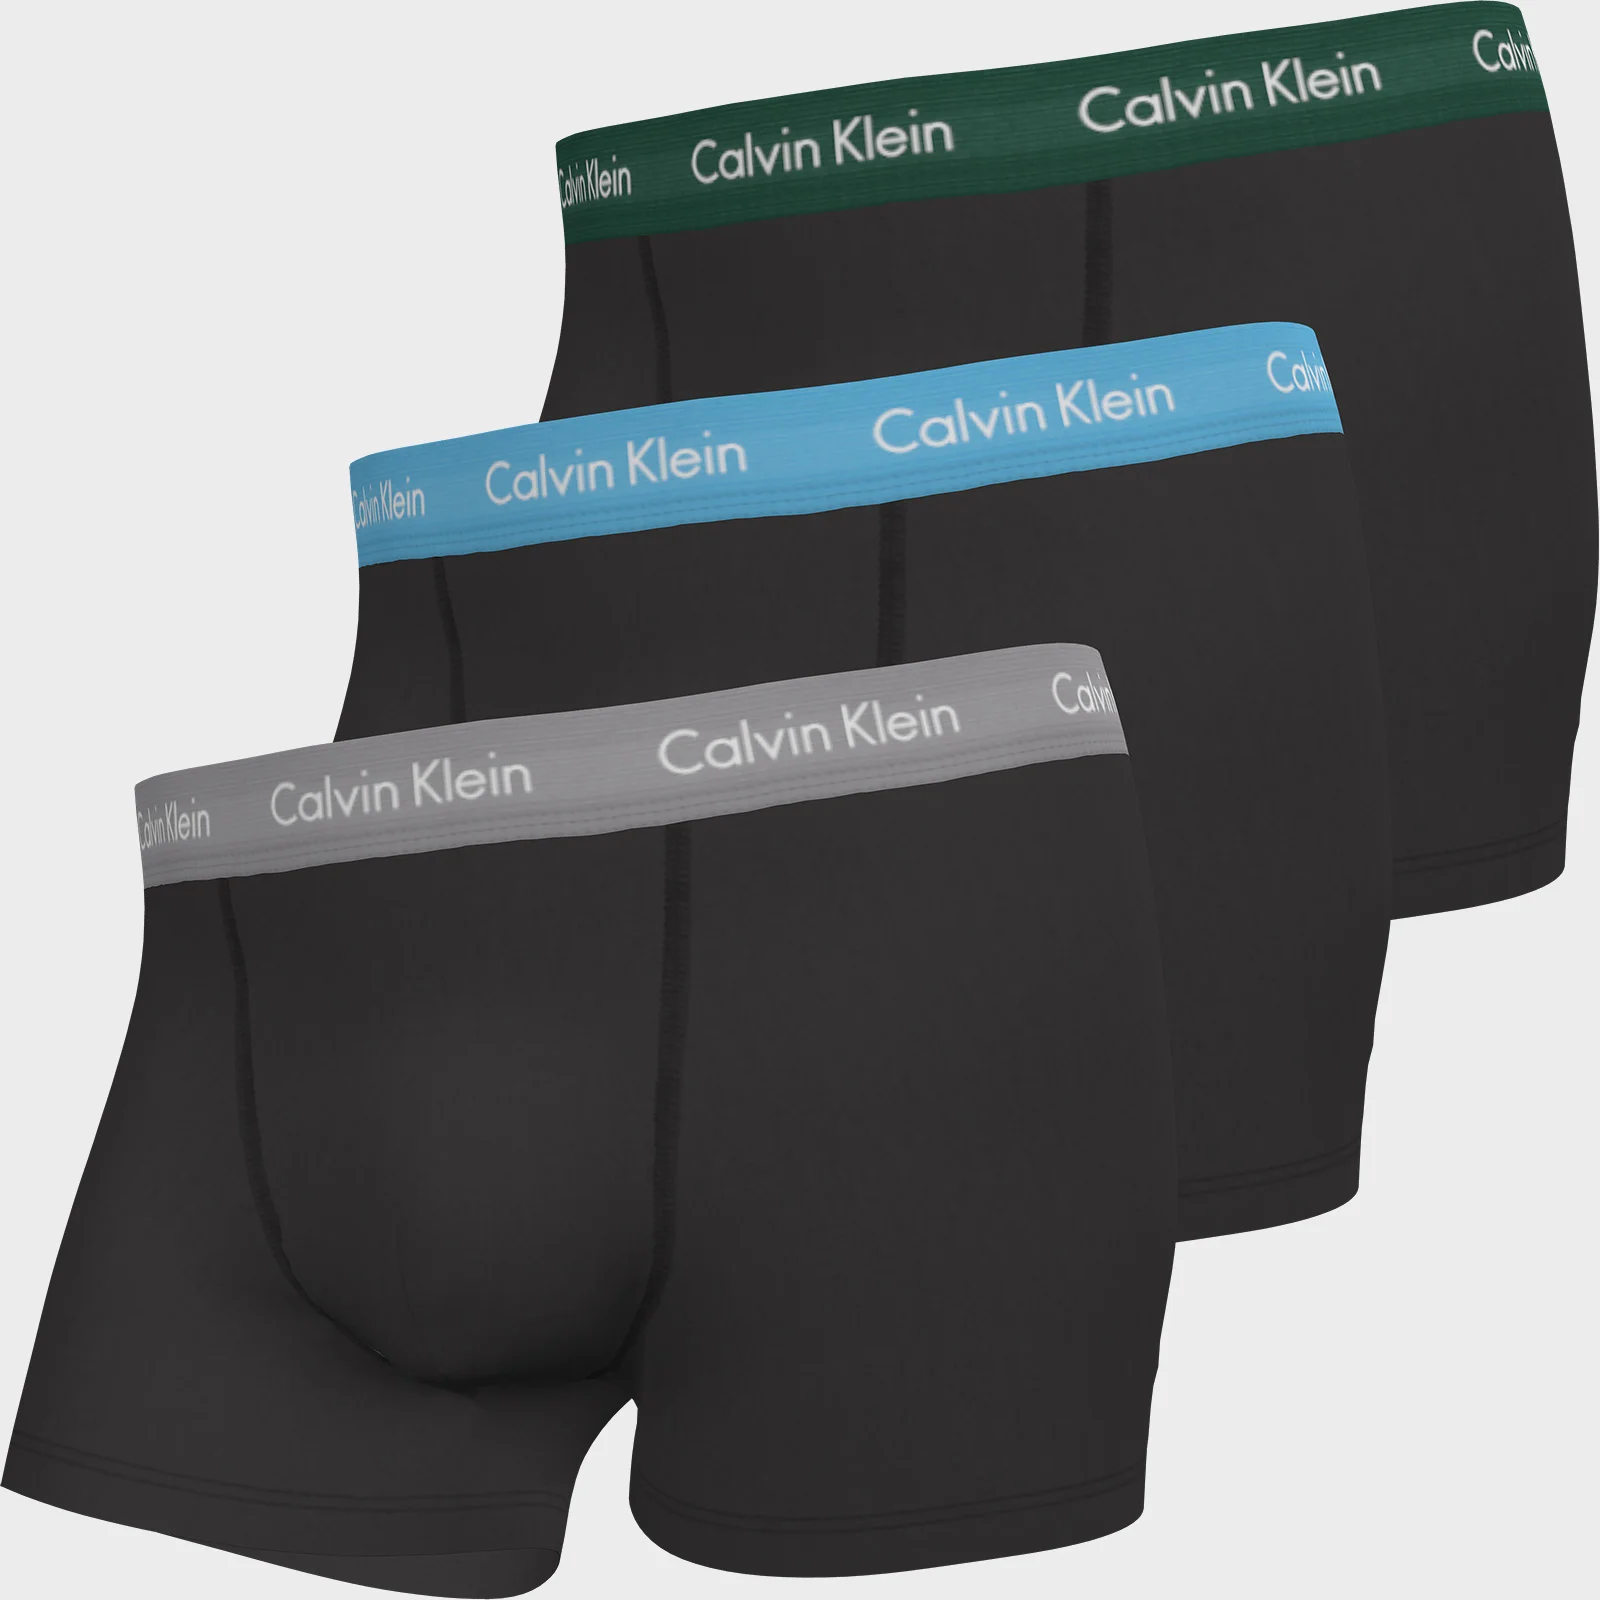 Calvin Klein Men's Cotton Stretch 3 Pack Trunks with Contrast Waistband - B-Jade Sea/Sky High/Sleek Silver Image 1